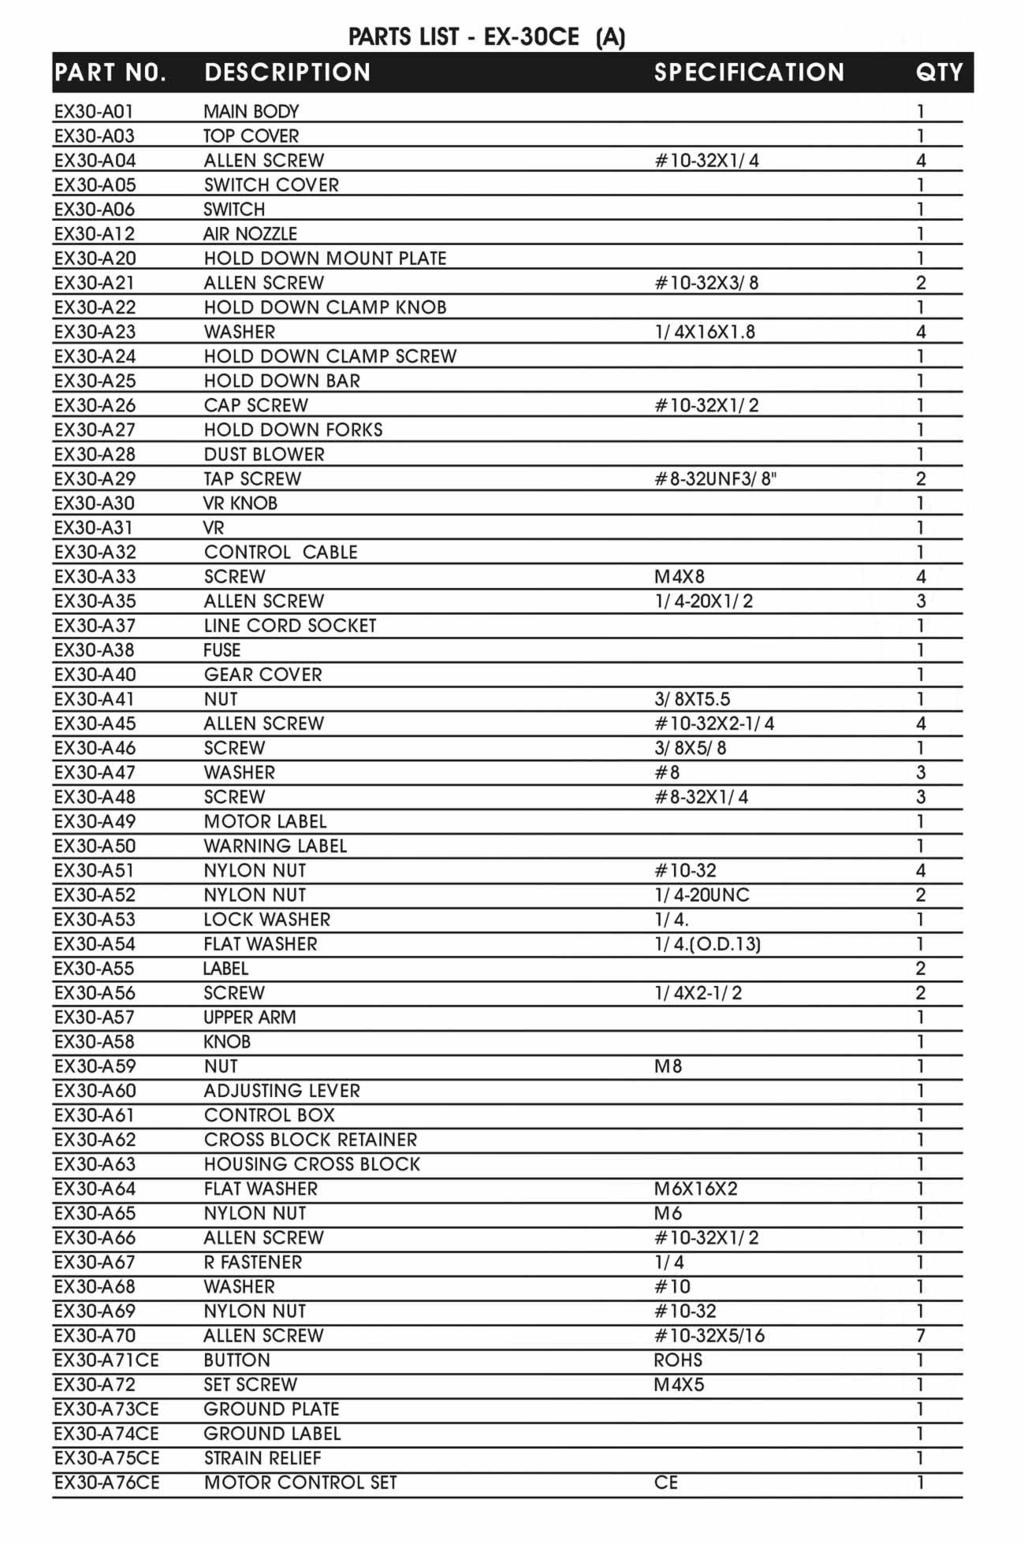 EX-30 Prts List (A).